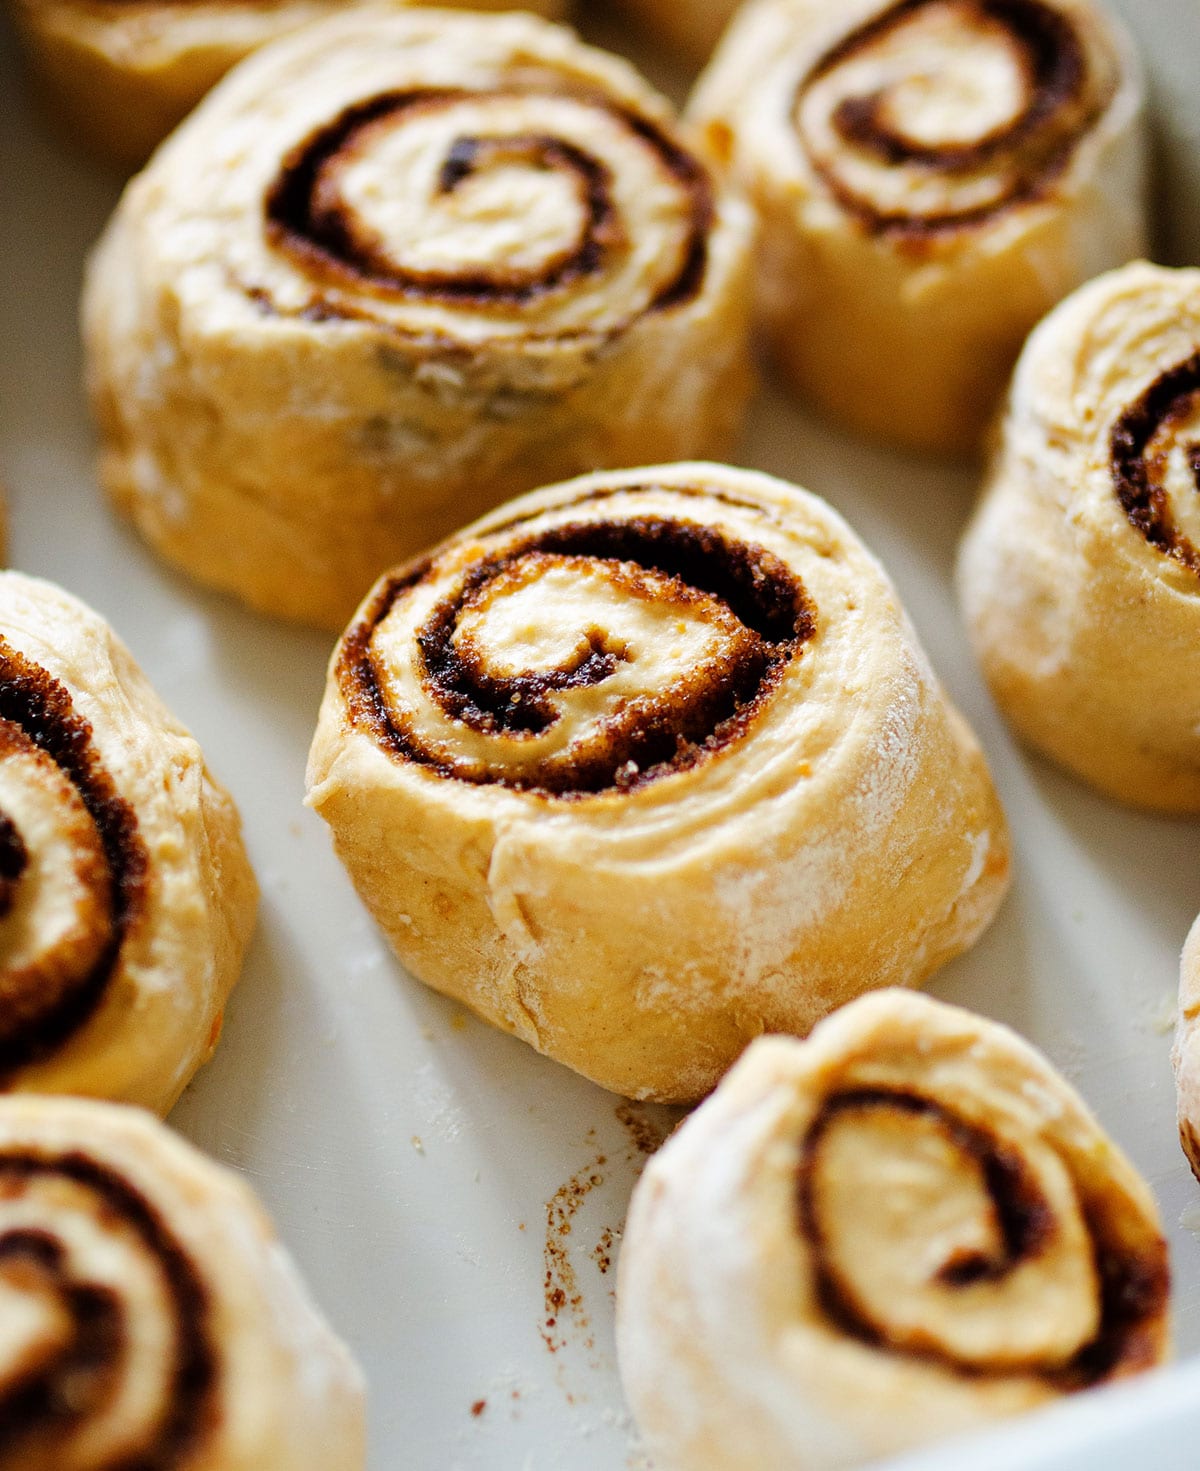 Raw cinnamon rolls in a baking dish.